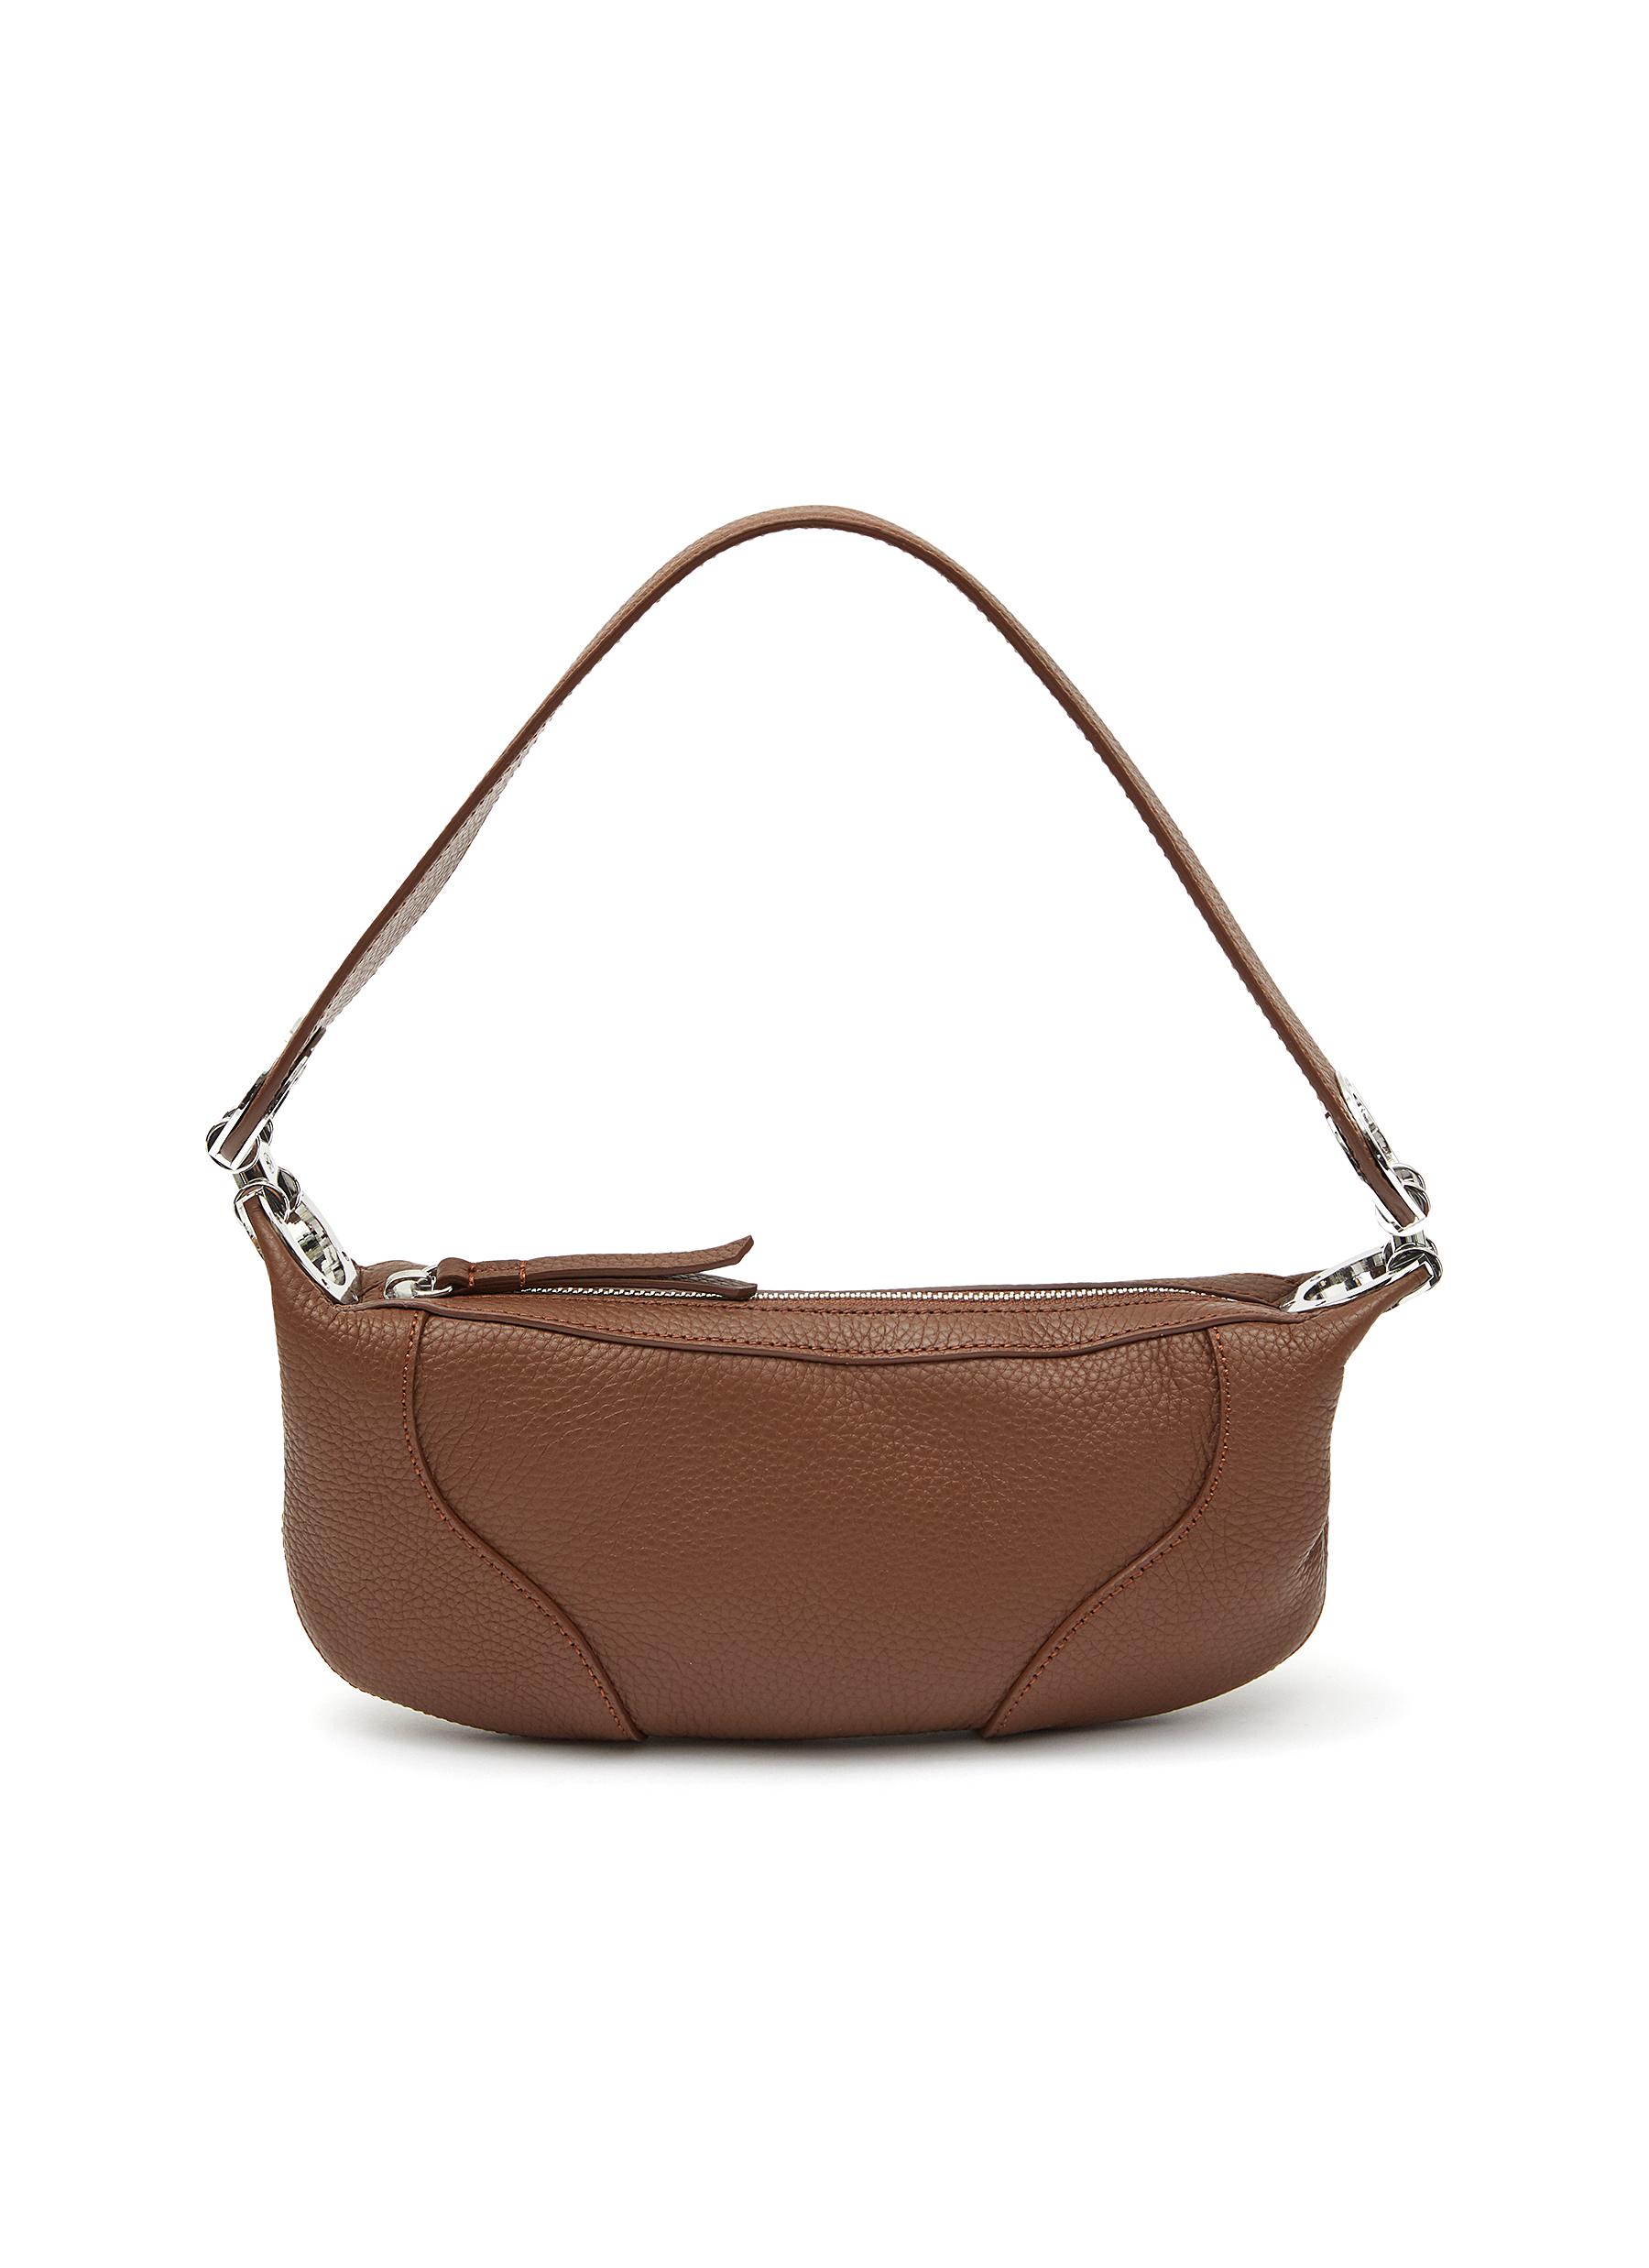 BY FAR | 'Mini Amira' Leather Shoulder Bag | Women | Lane Crawford